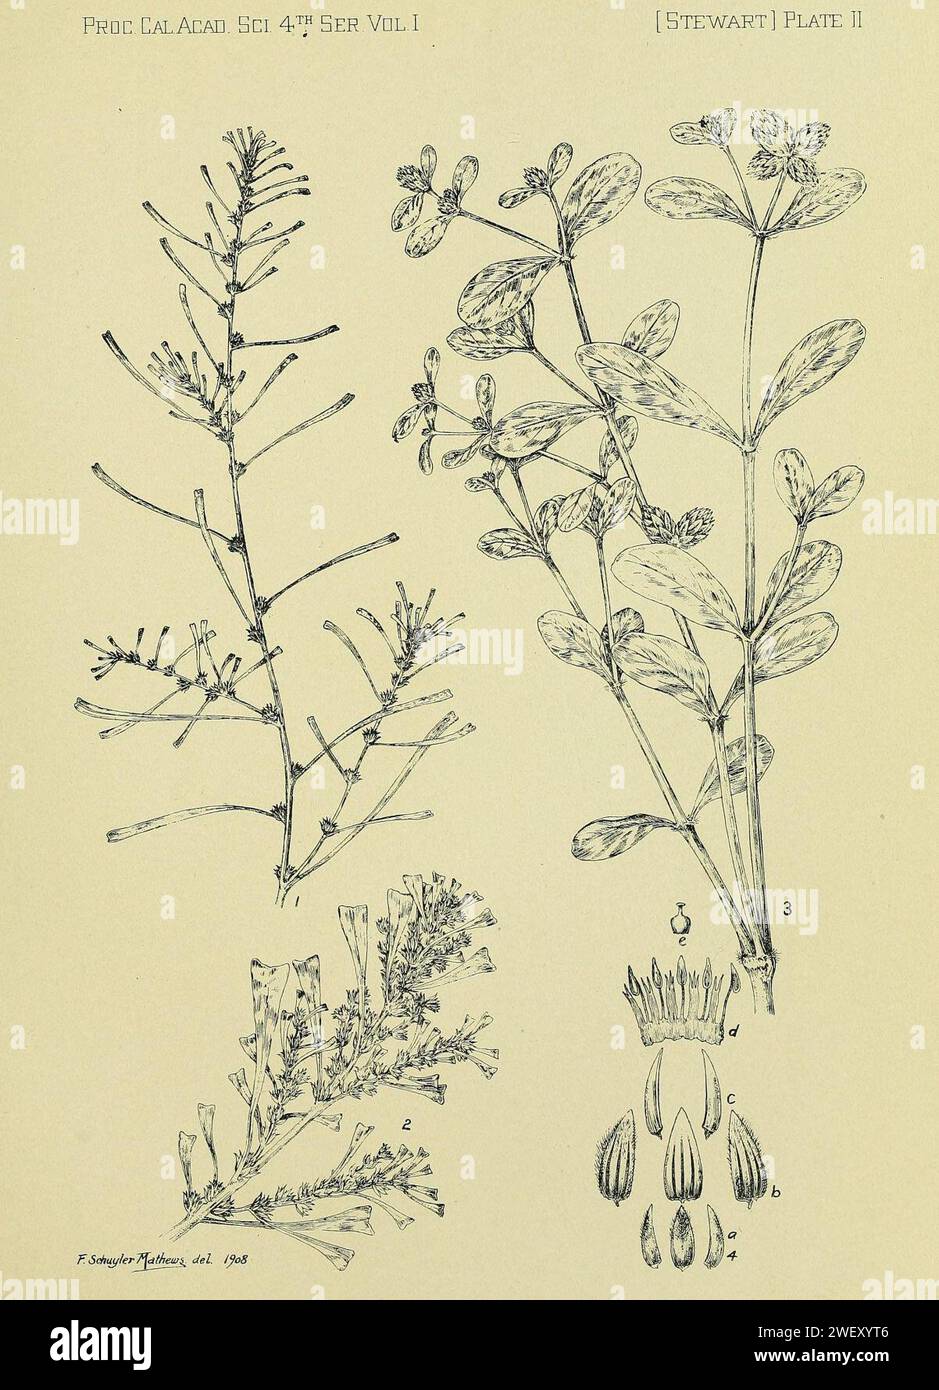 Amaranthus sclerantoides, Alternanthera galapagensis. Stock Photo